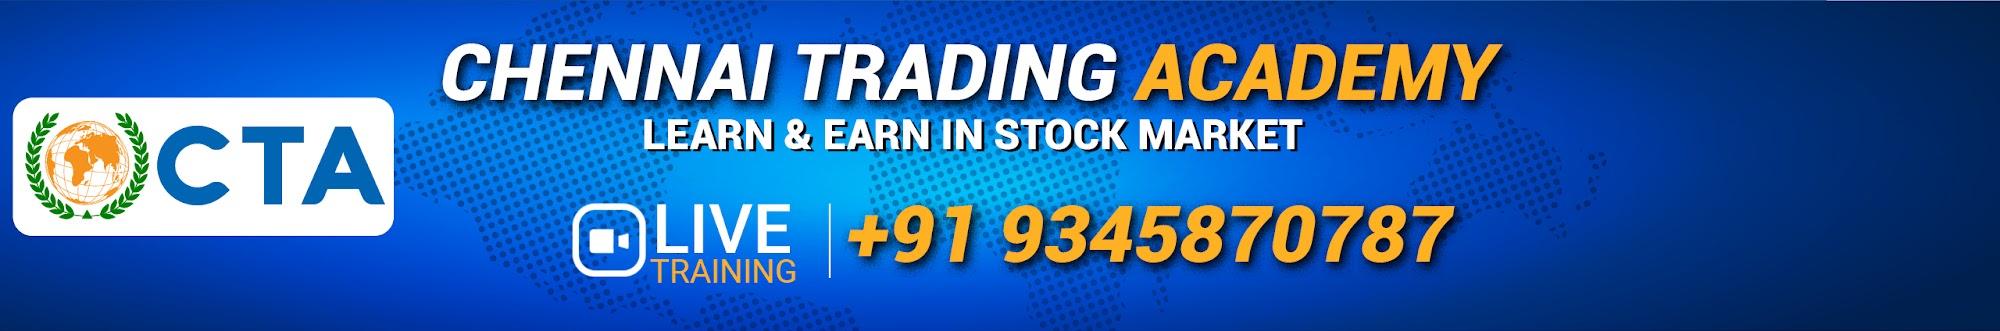 Chennai Trading Academy 